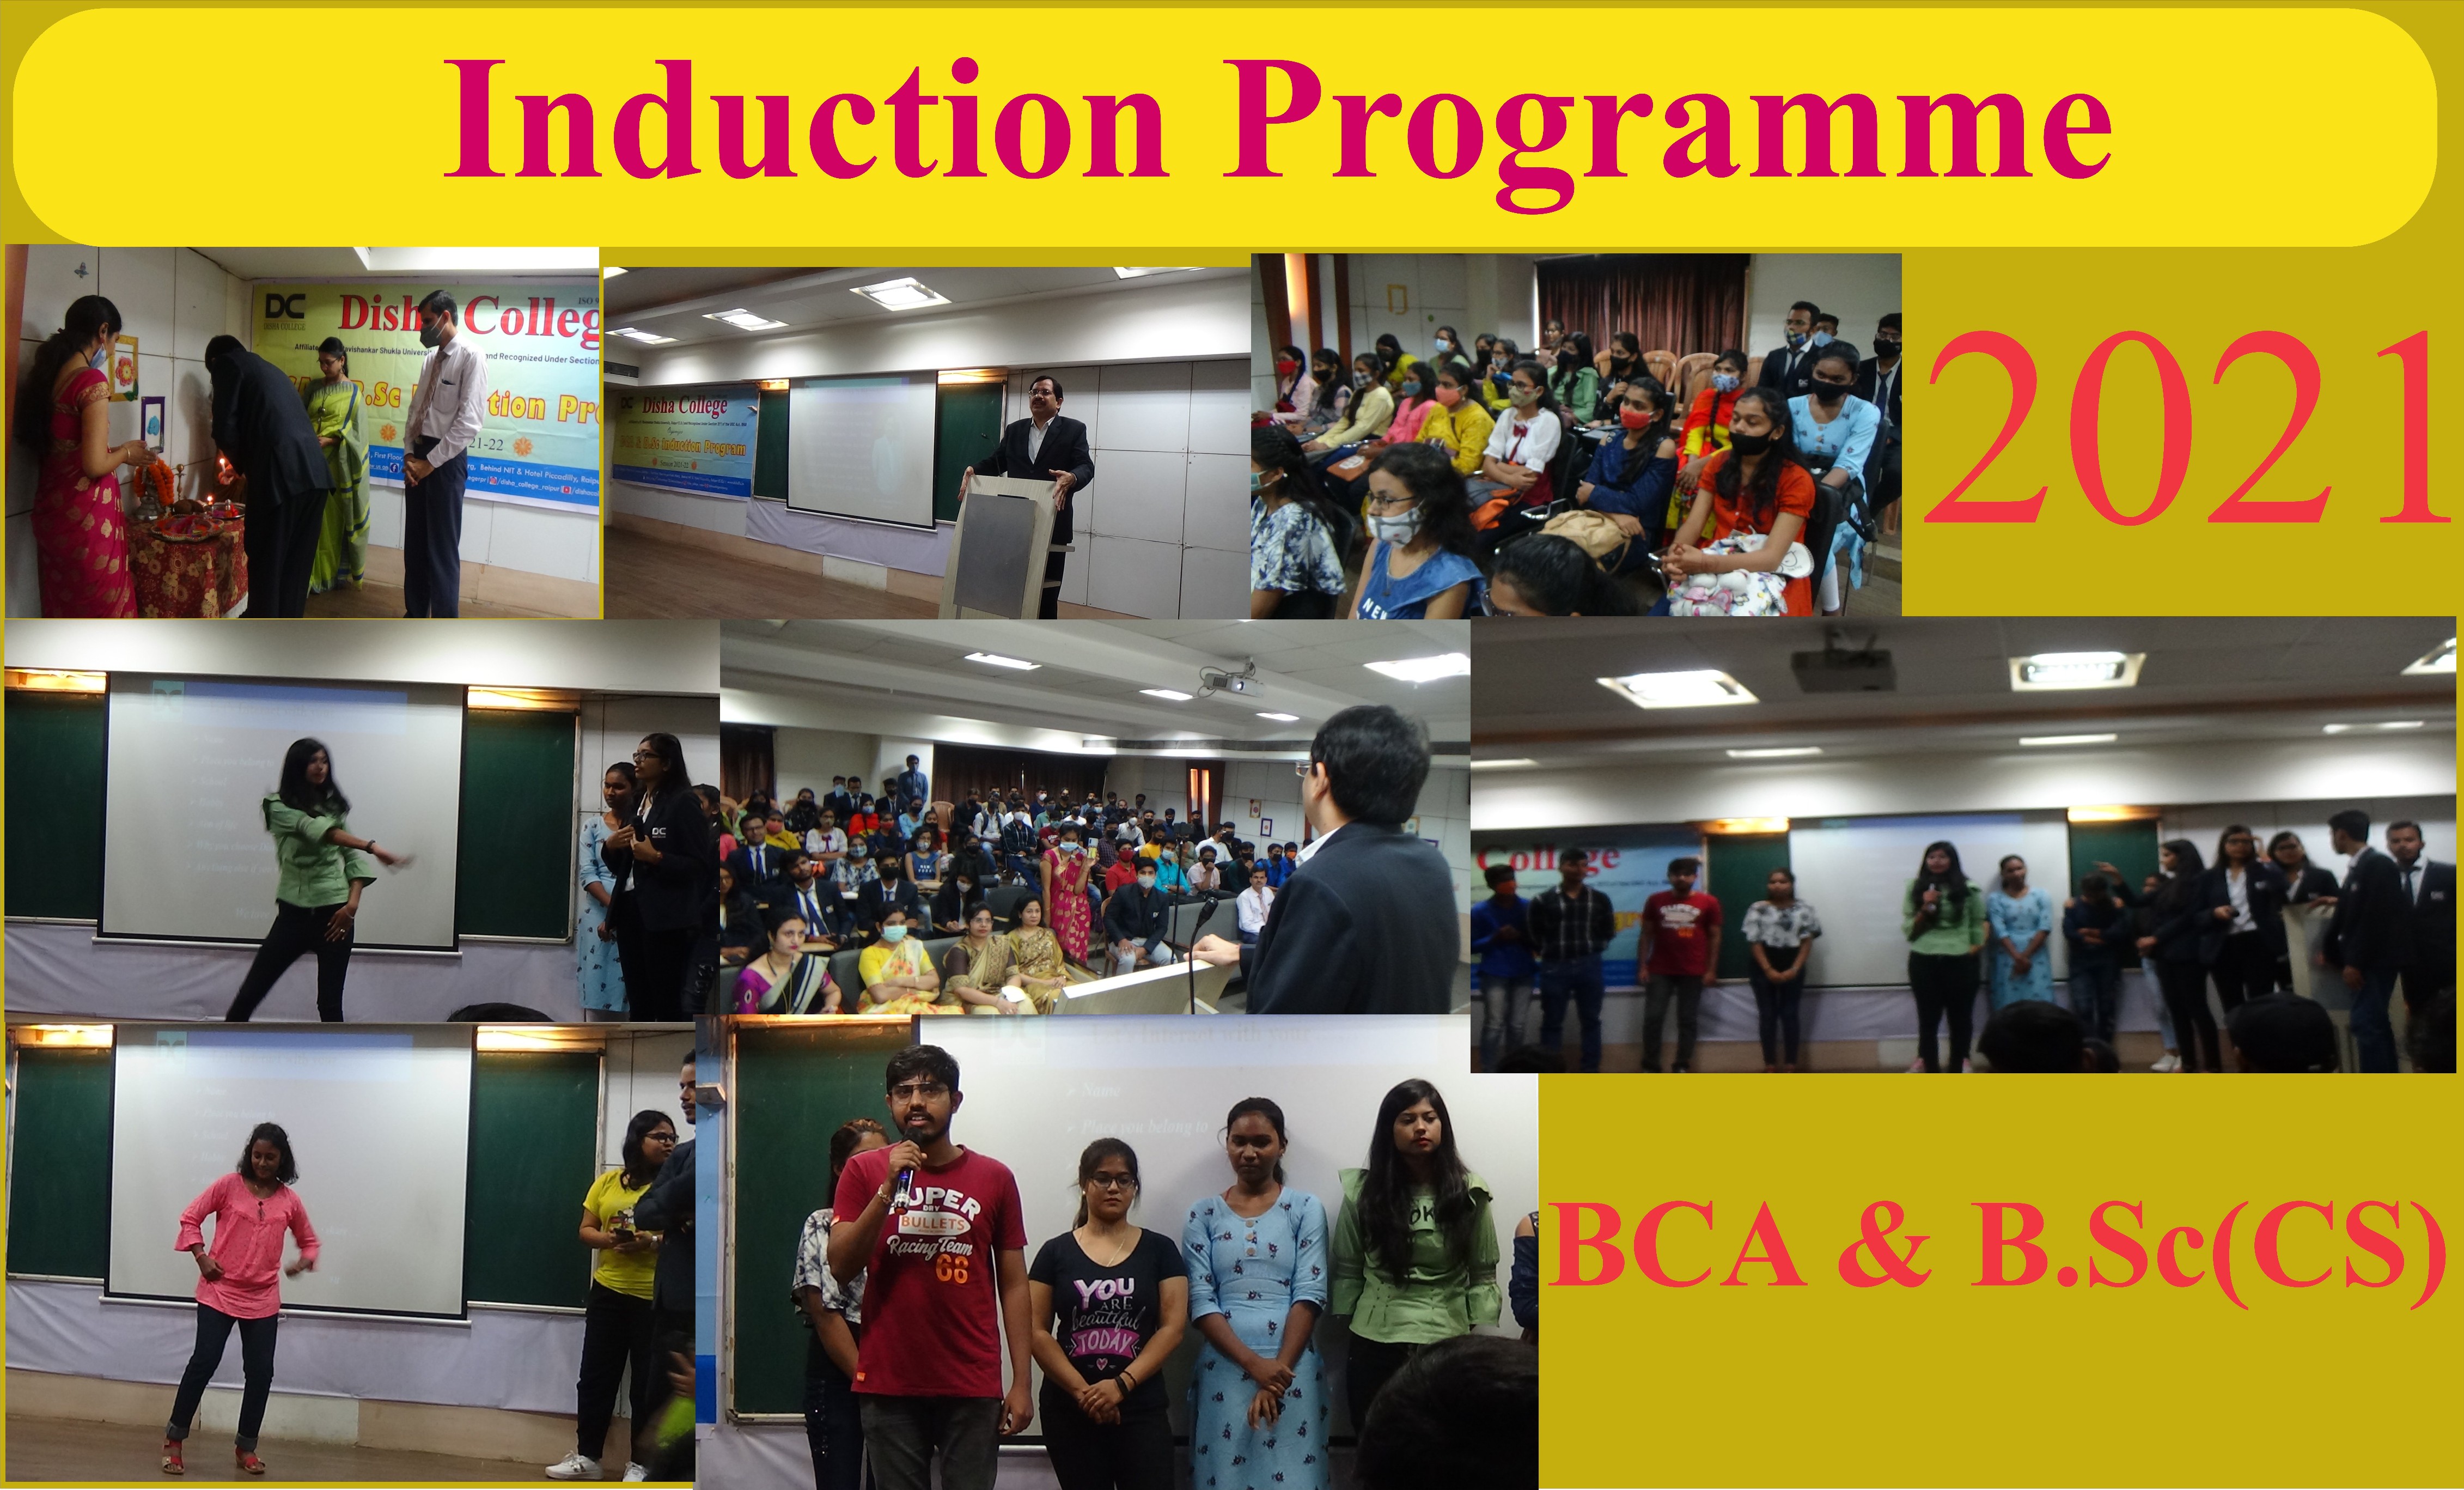 BCA & B.Sc.(CS) Induction Programme 2021